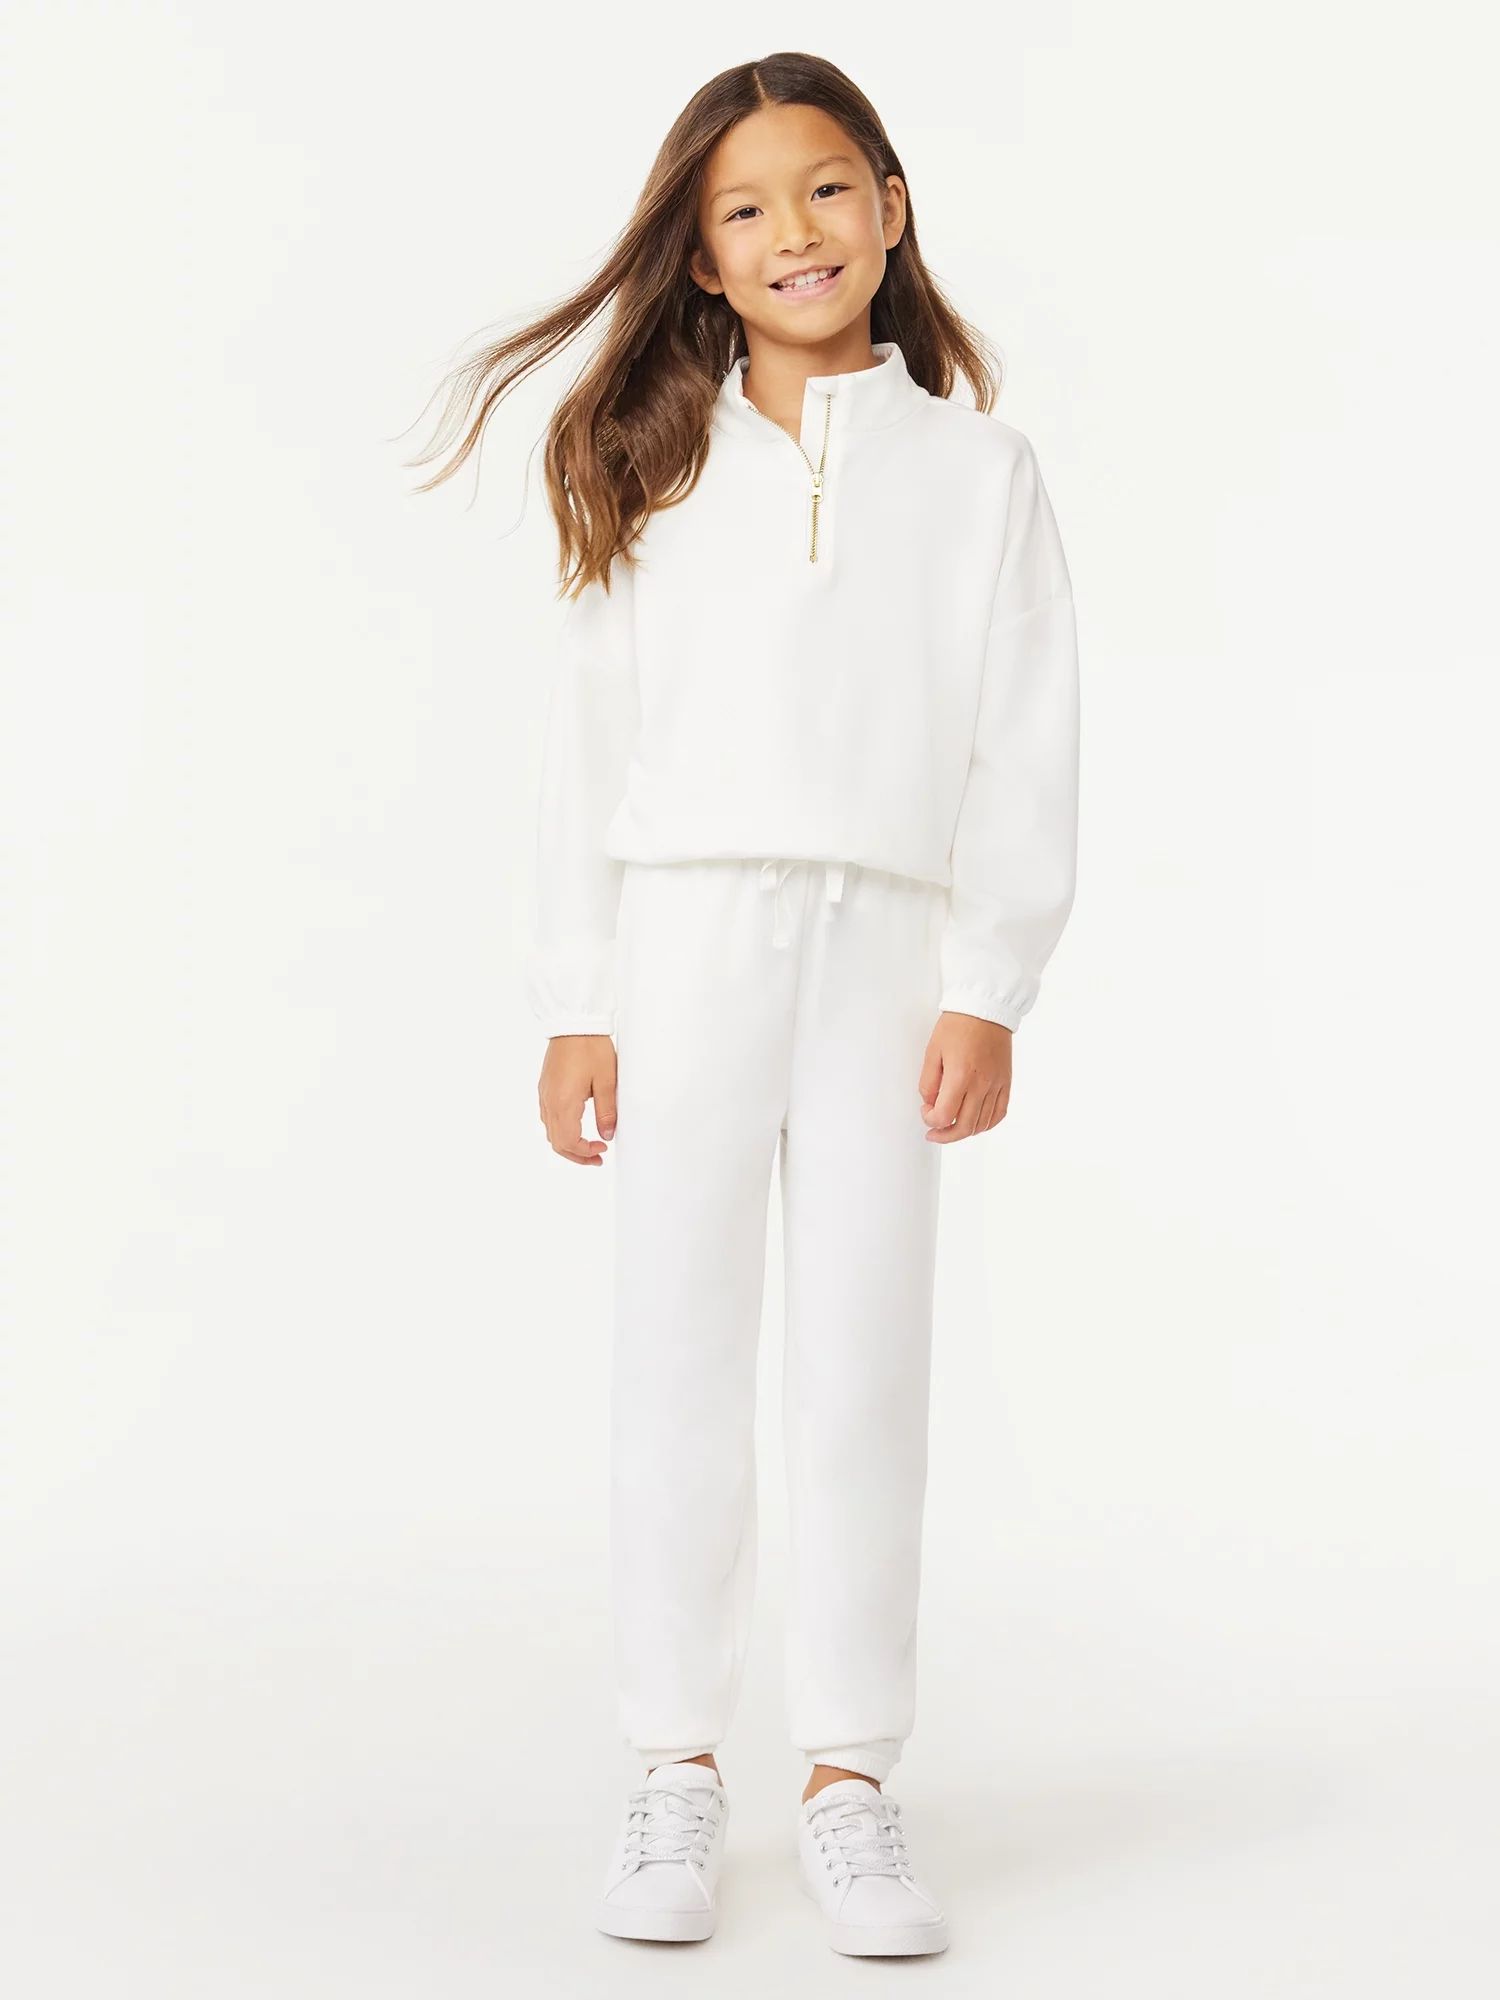 Scoop Girls Scuba Knit Mock Neck Sweatshirt and Joggers, 2-Piece Outfit Set, Sizes 4-18 | Walmart (US)